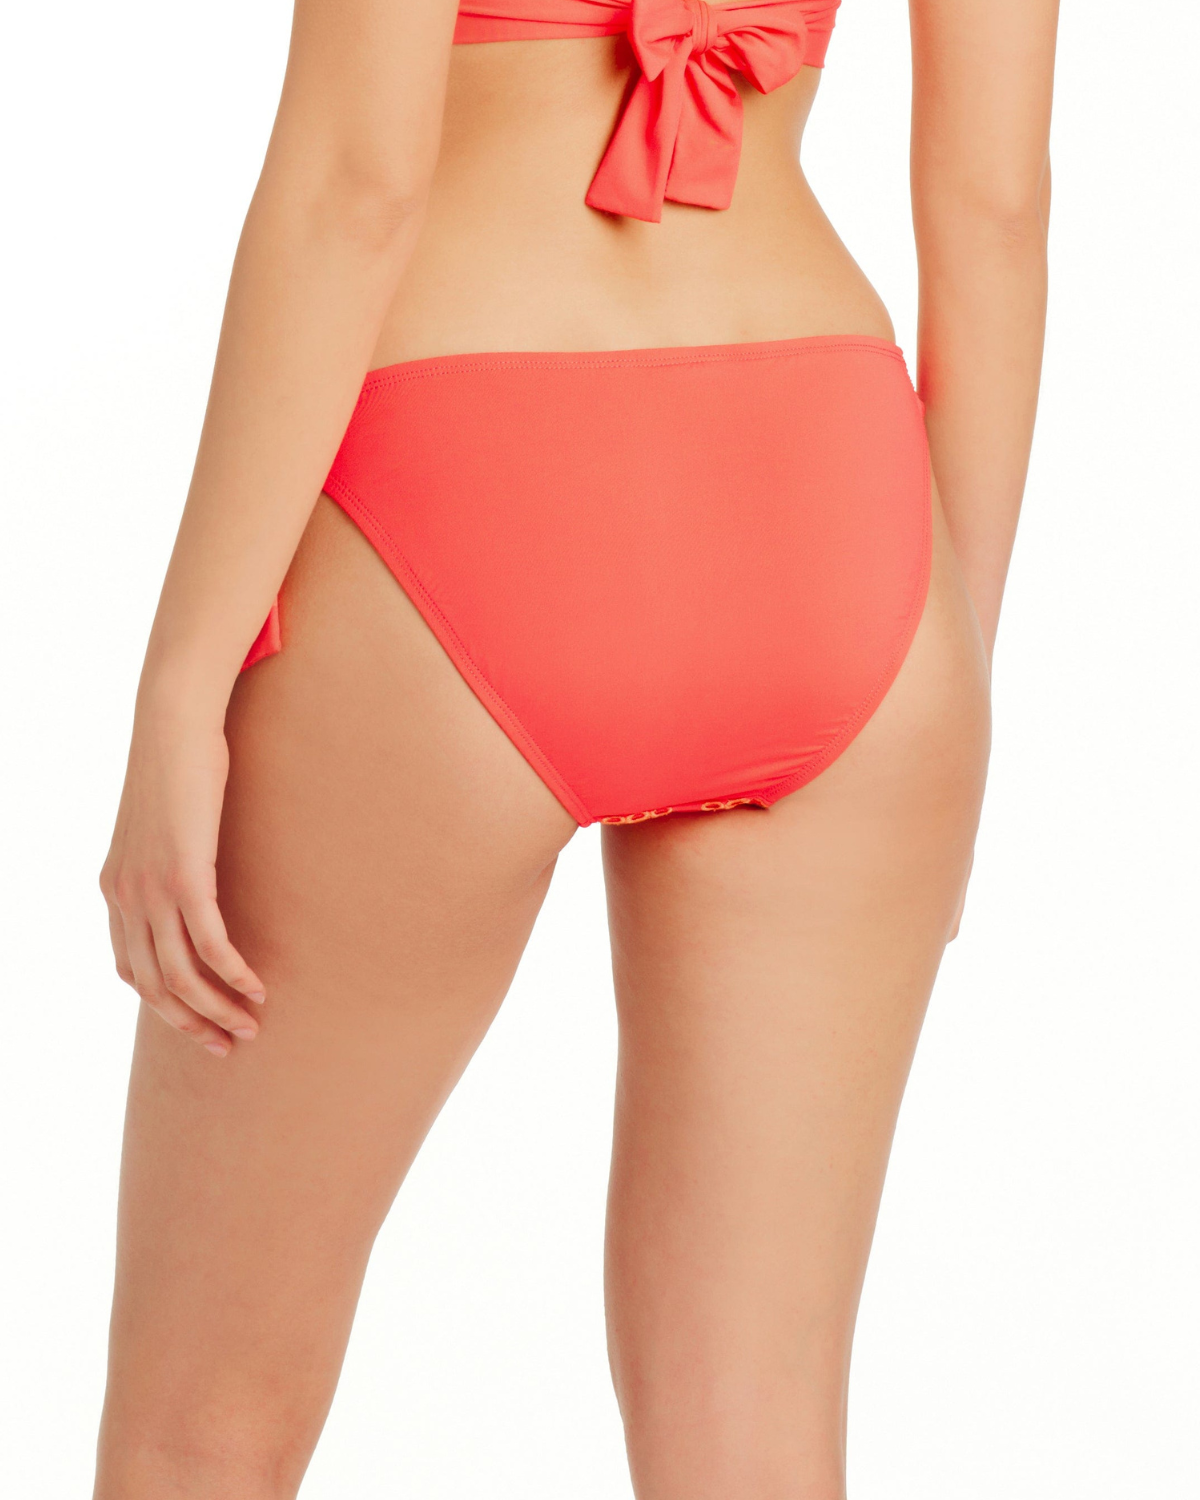 Model wearing a classic tie side bikini bottom in coral